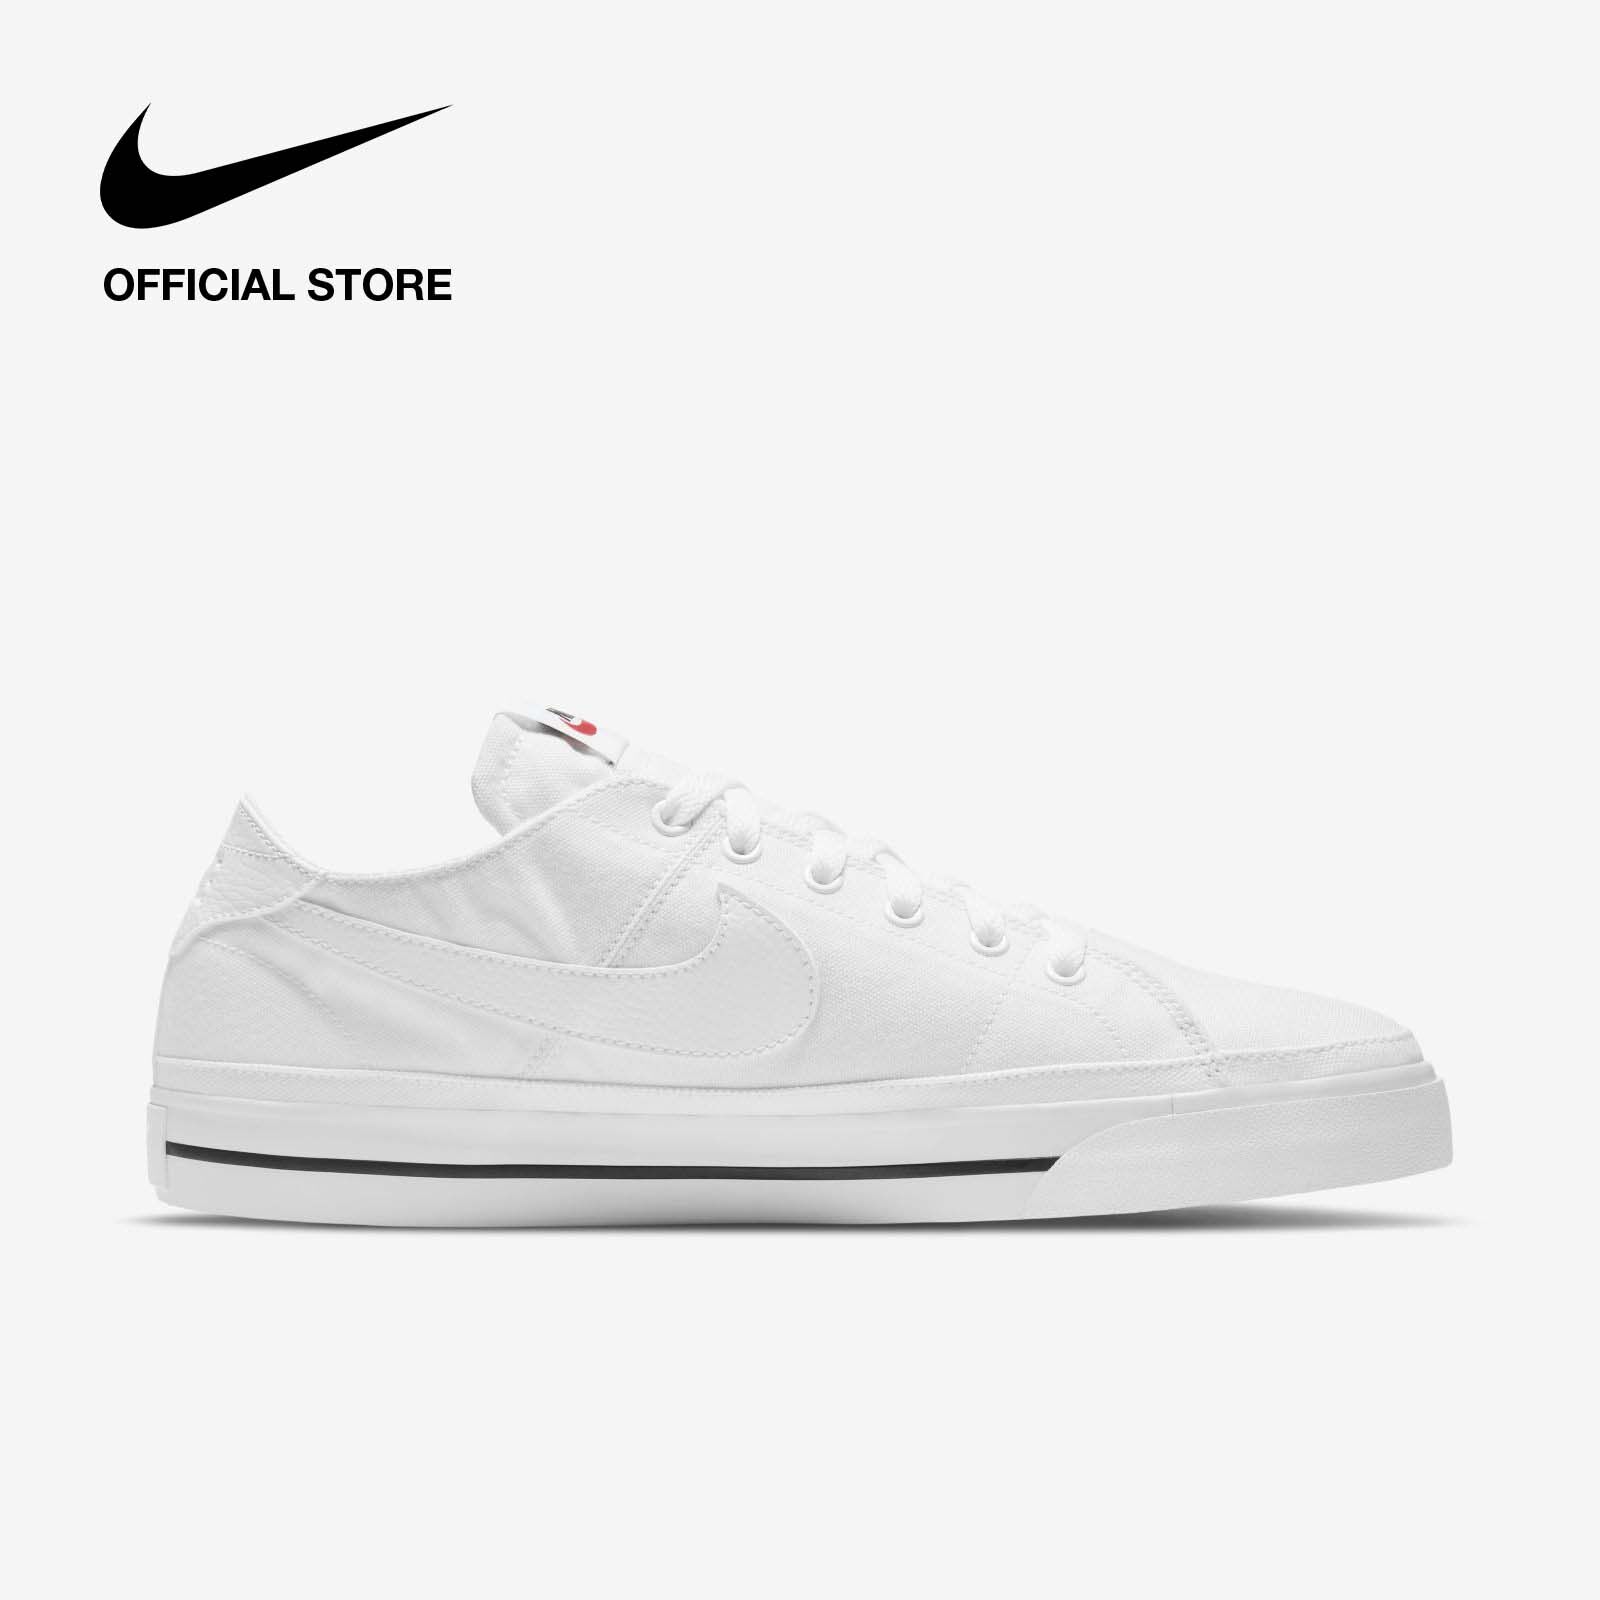 Nike Men's Court Legacy Canvas Shoes - White รองเท้าผู้ชาย Nike Court Legacy Canvas - สีขาว